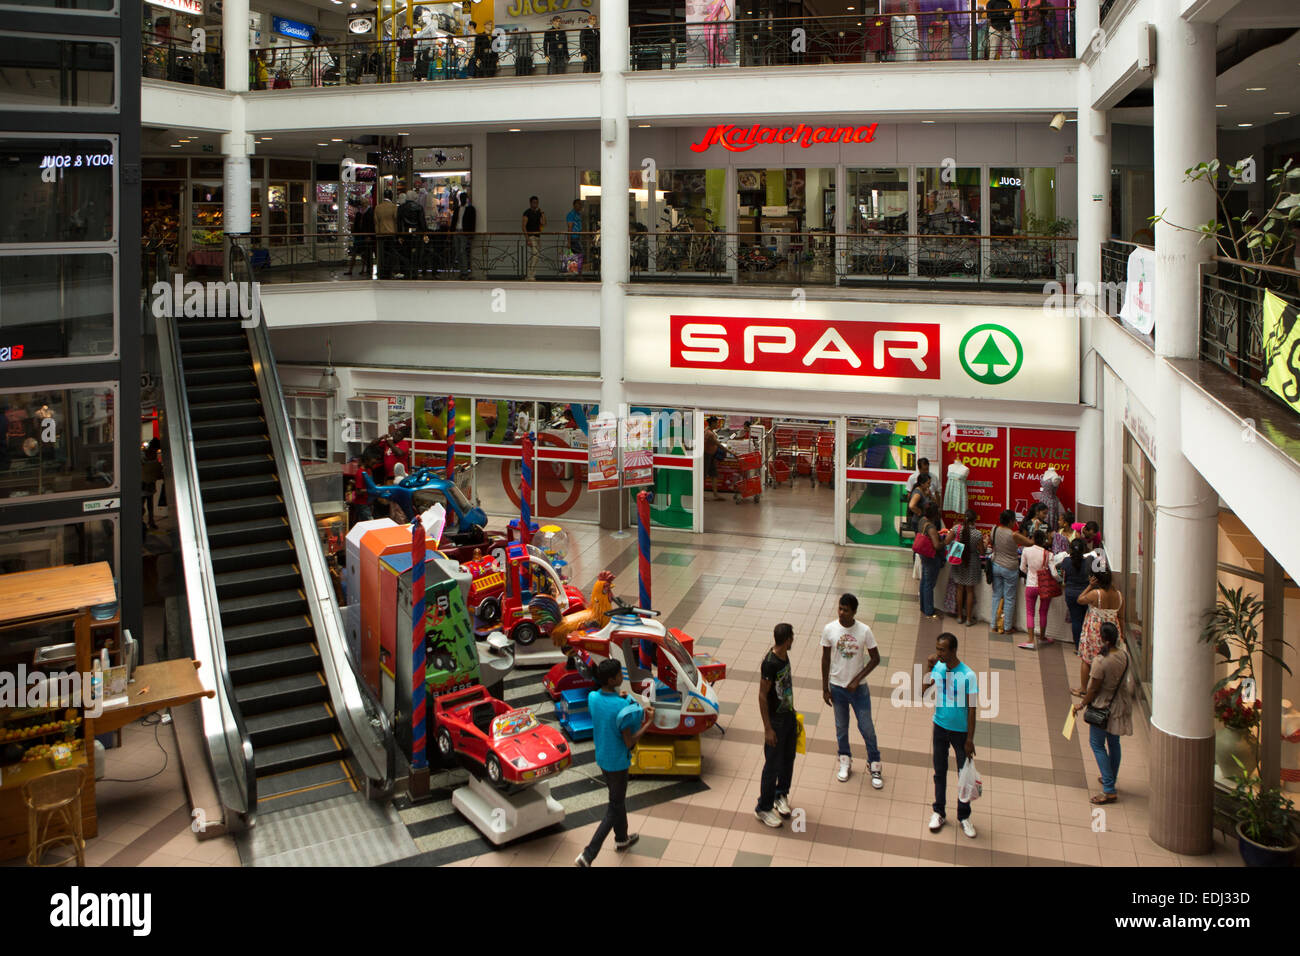 Mauritius, Quatre Bornes, St Jean Road, inside Orchard Centre shopping mall, Spar supermarket Stock Photo